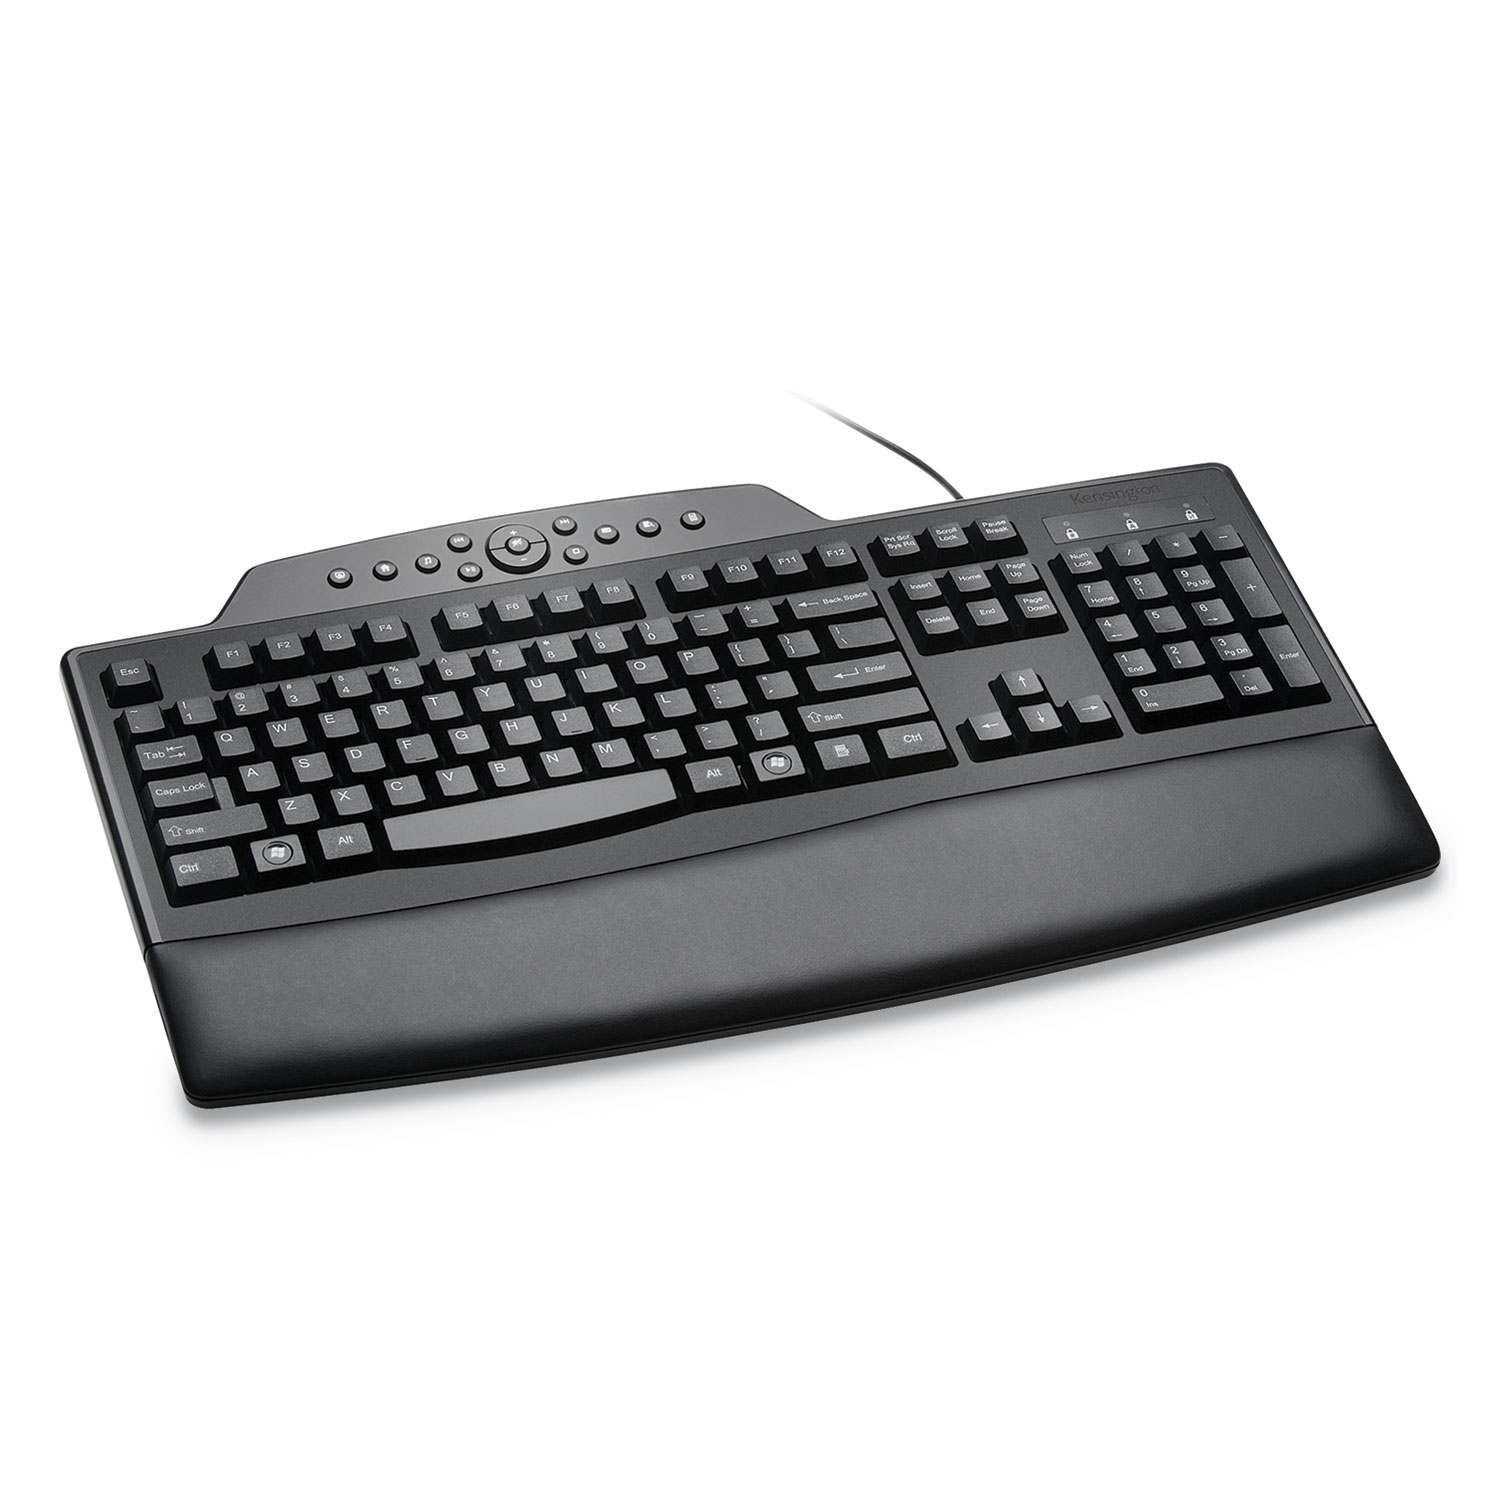  Kensington K72402US Pro Fit Comfort Keyboard, Internet/Media Keys, Wired, Black (KMW72402) 